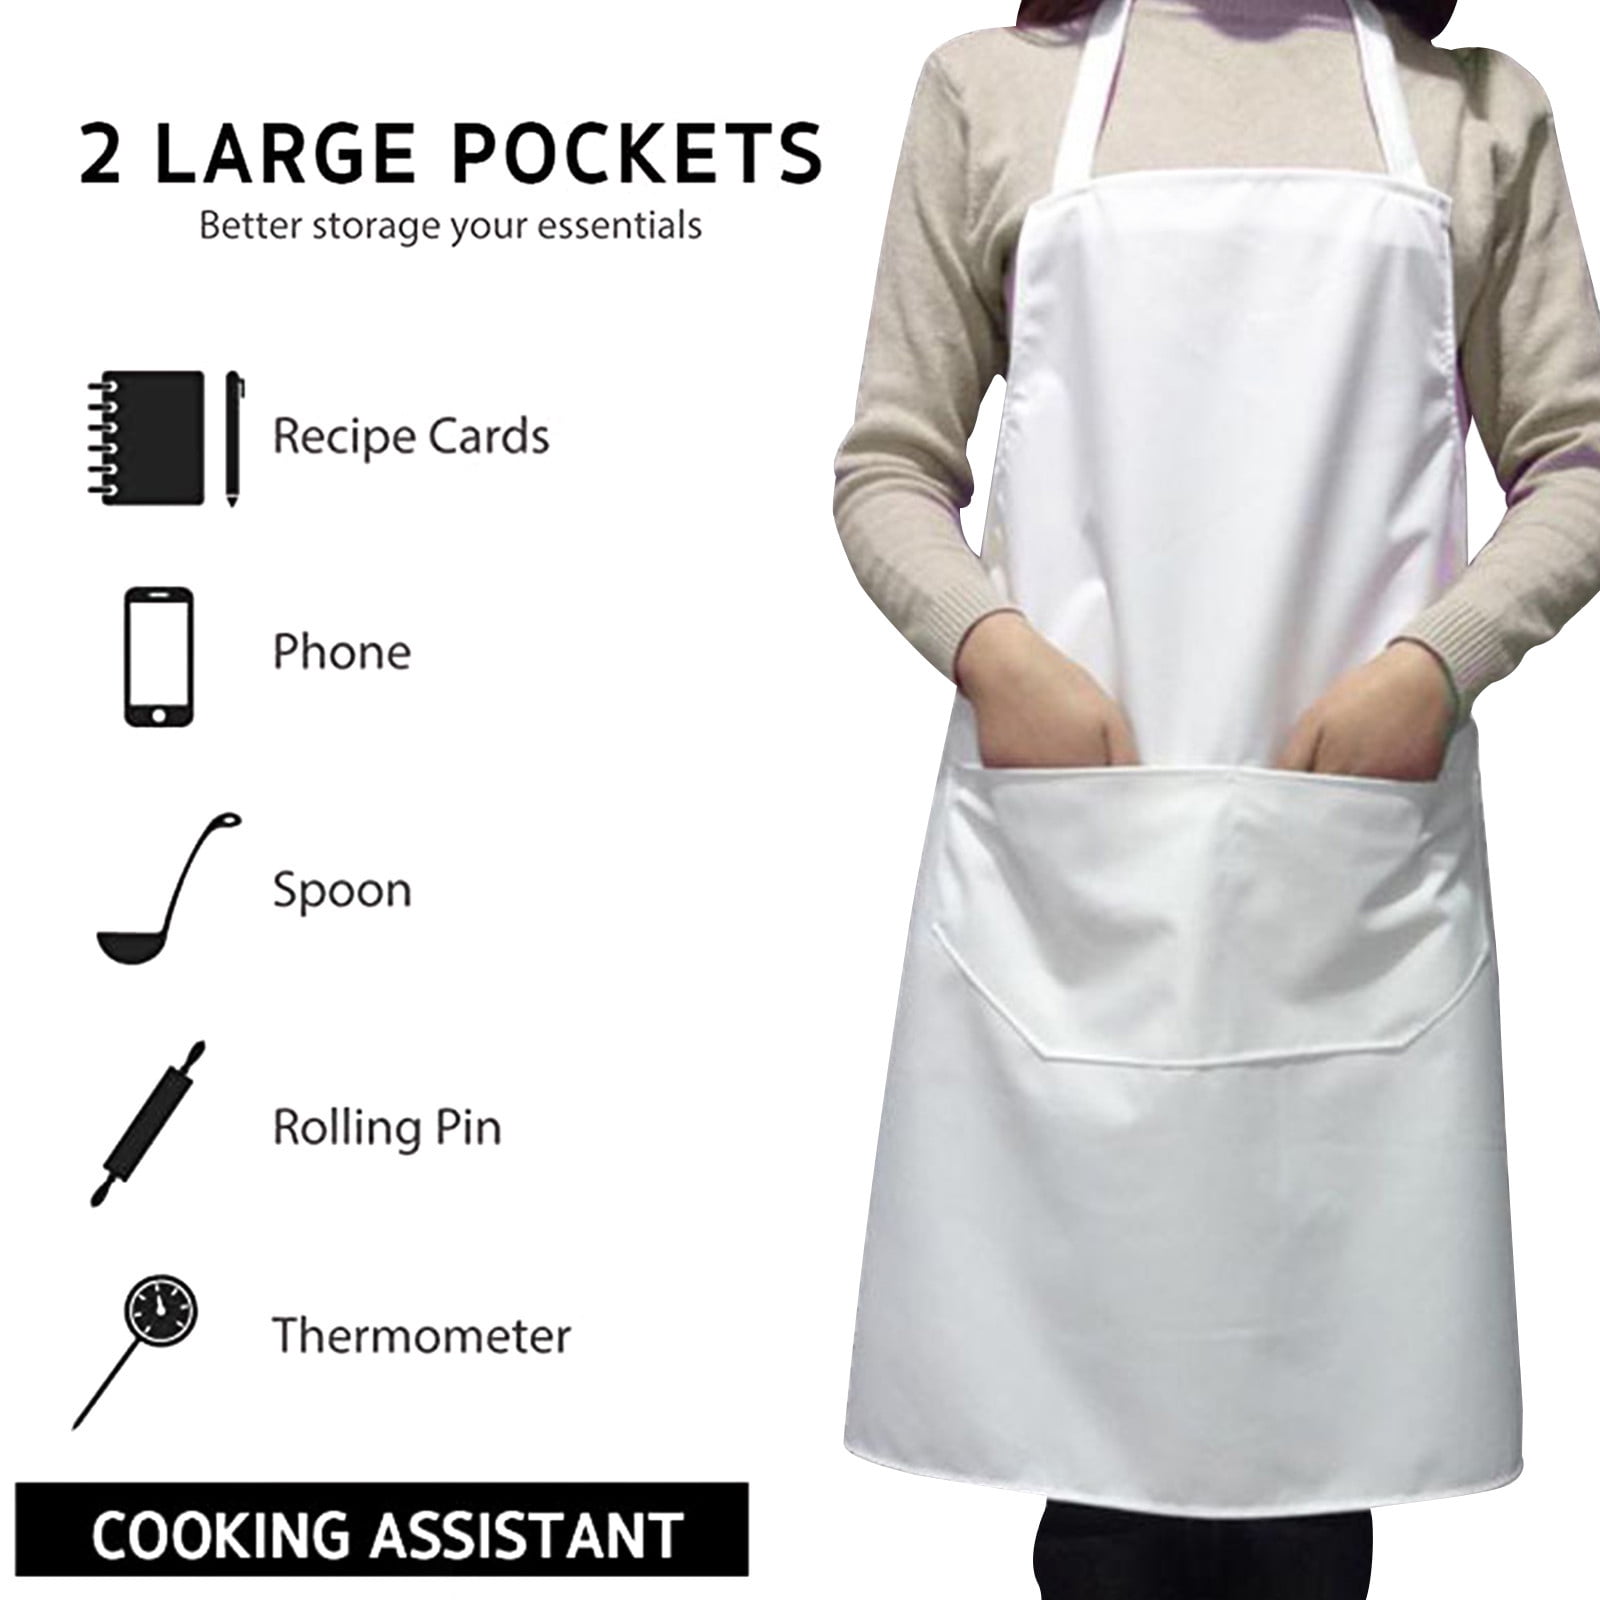 35 new bin star chefs kitchen restraunt bib apron best quality usa fast shipping 